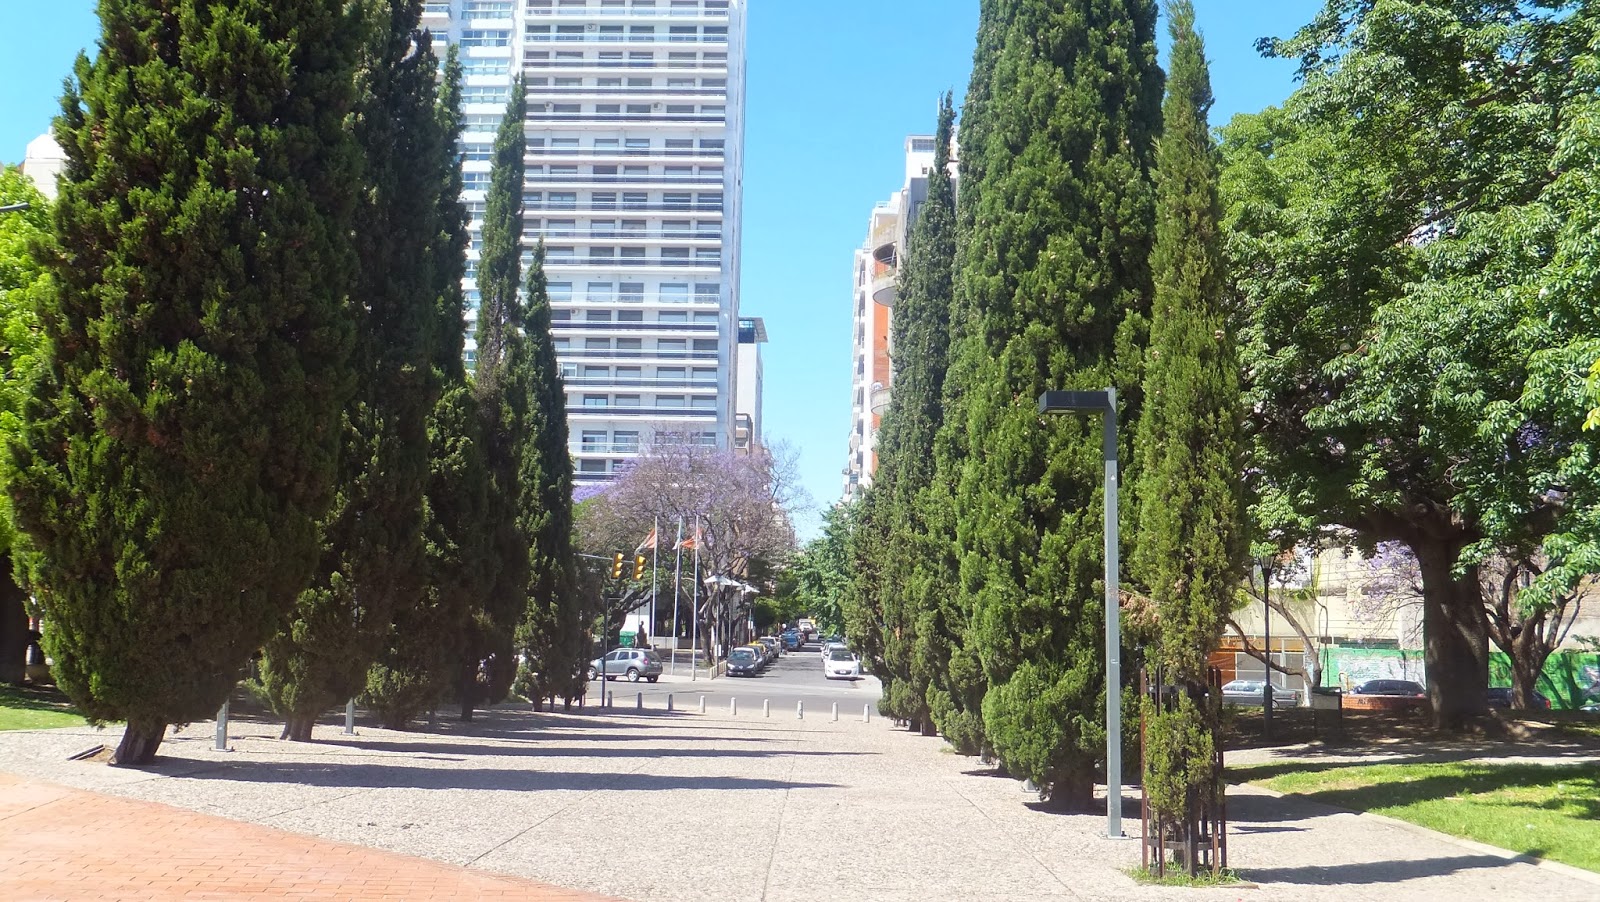 Parque España, Rosario, Argentina, lisa N, Blog de Viajes, Lifestyle, Travel